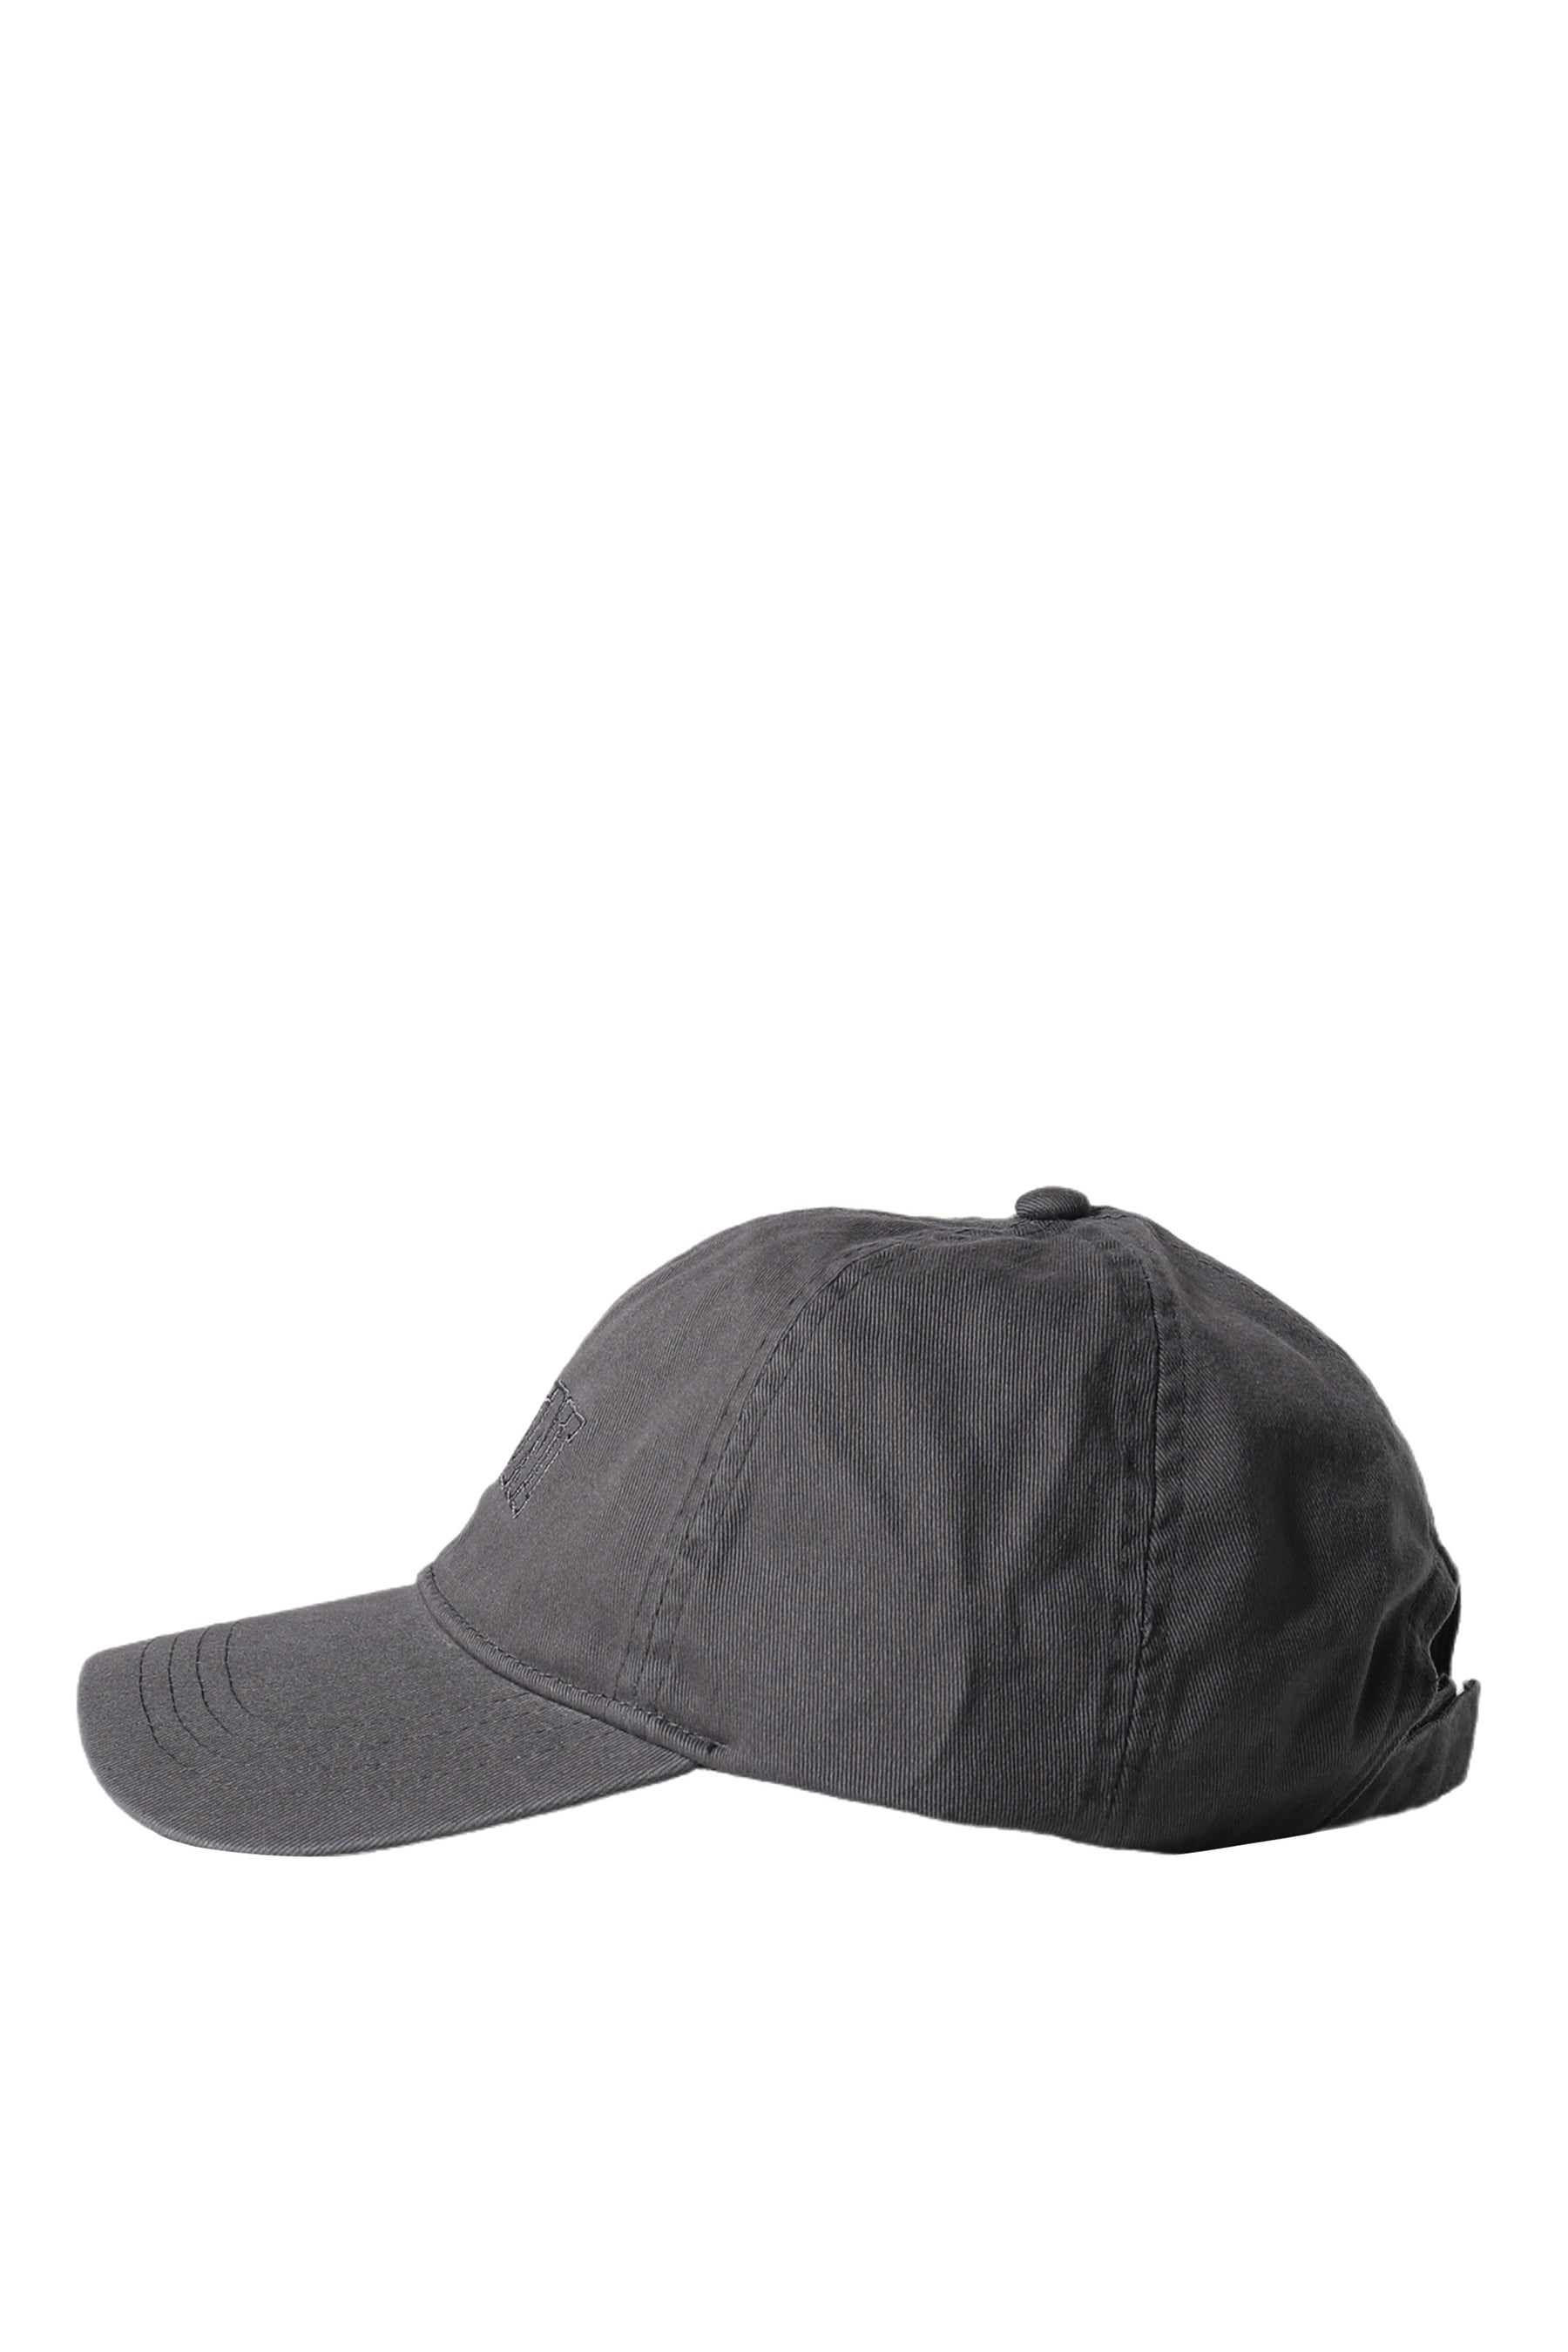 CAP HAT / GRY